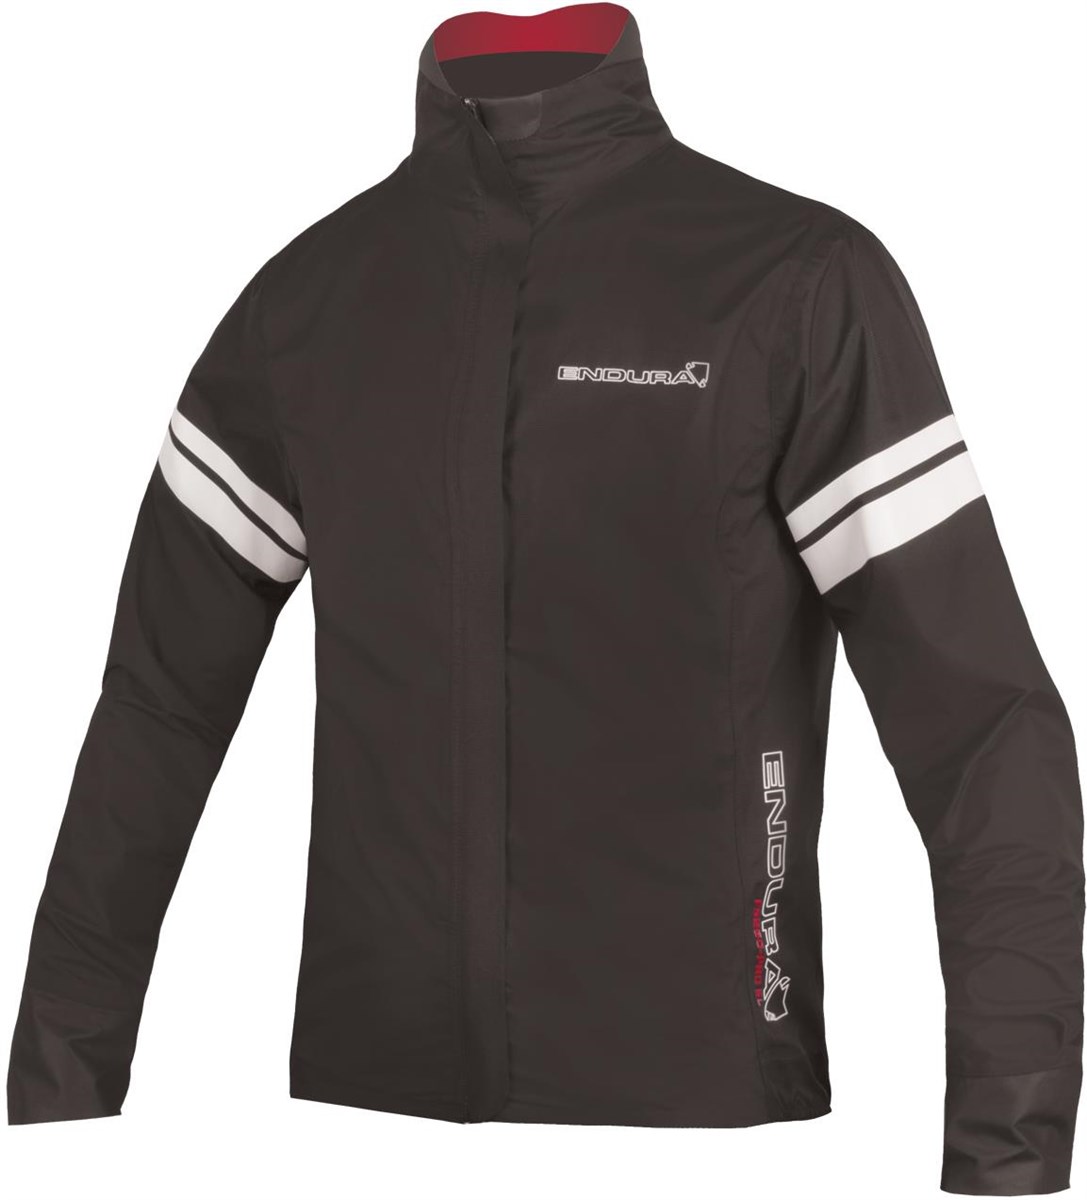 Endura FS260 Pro SL Shell Cycling Jacket product image